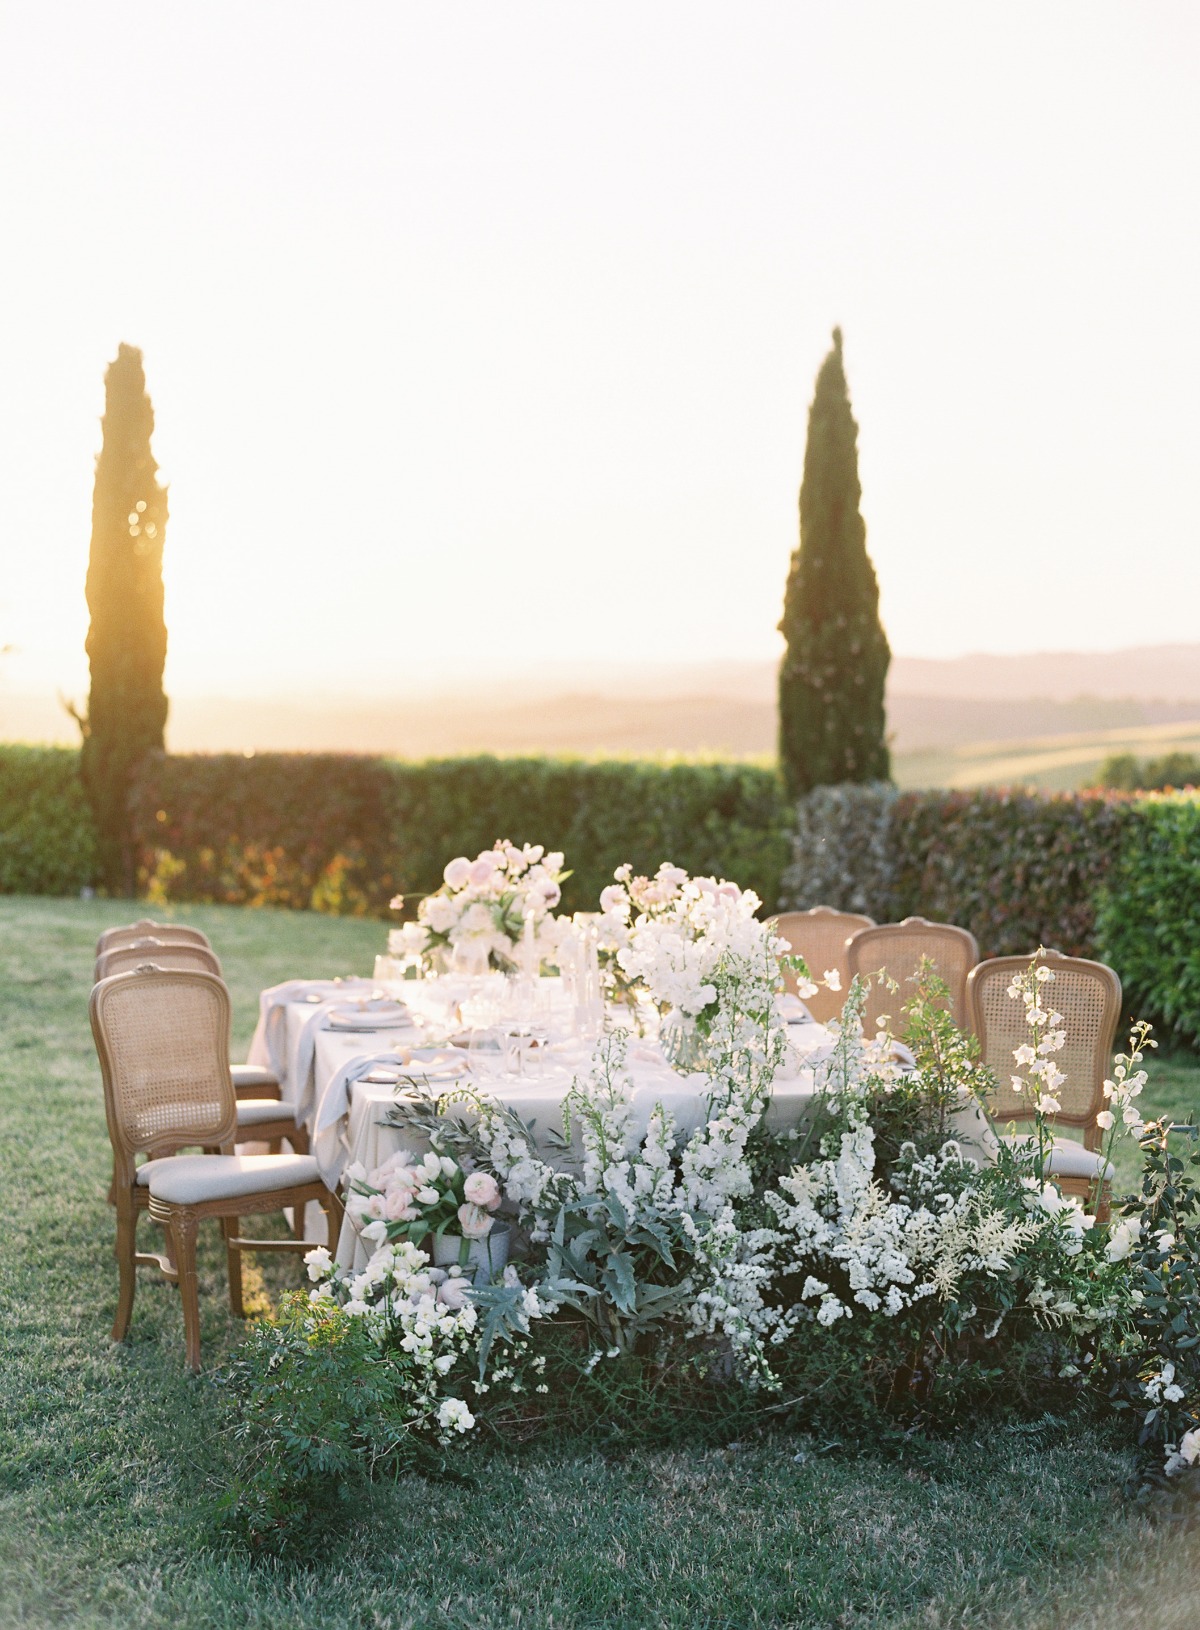 Elegant, chic white floral wedding reception at Italian villa